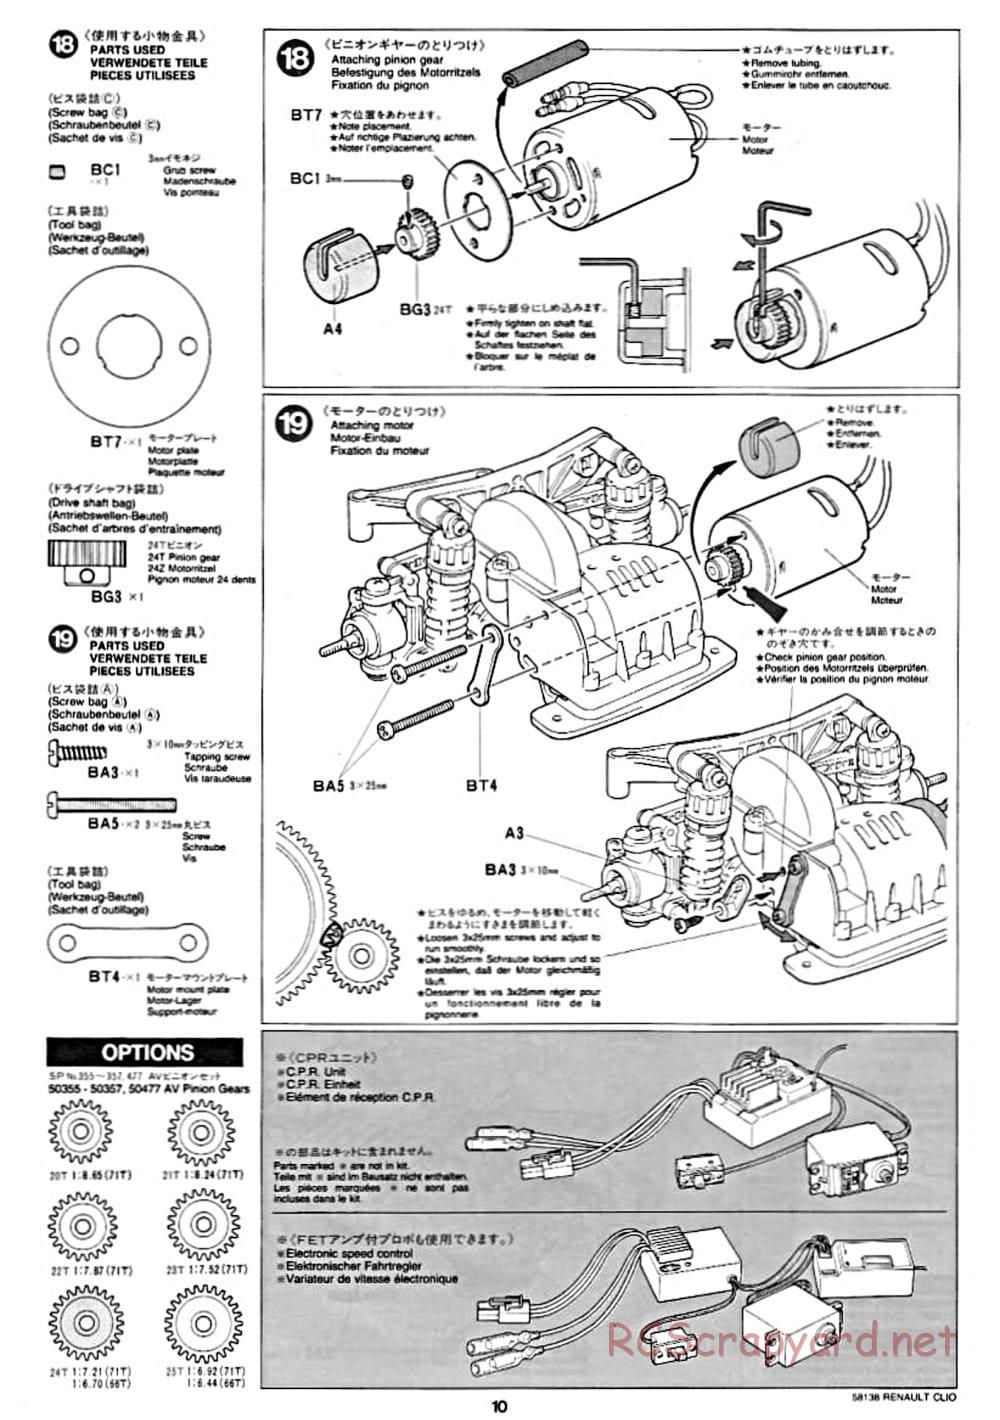 Tamiya - Renault Clio Williams Chassis - Manual - Page 10